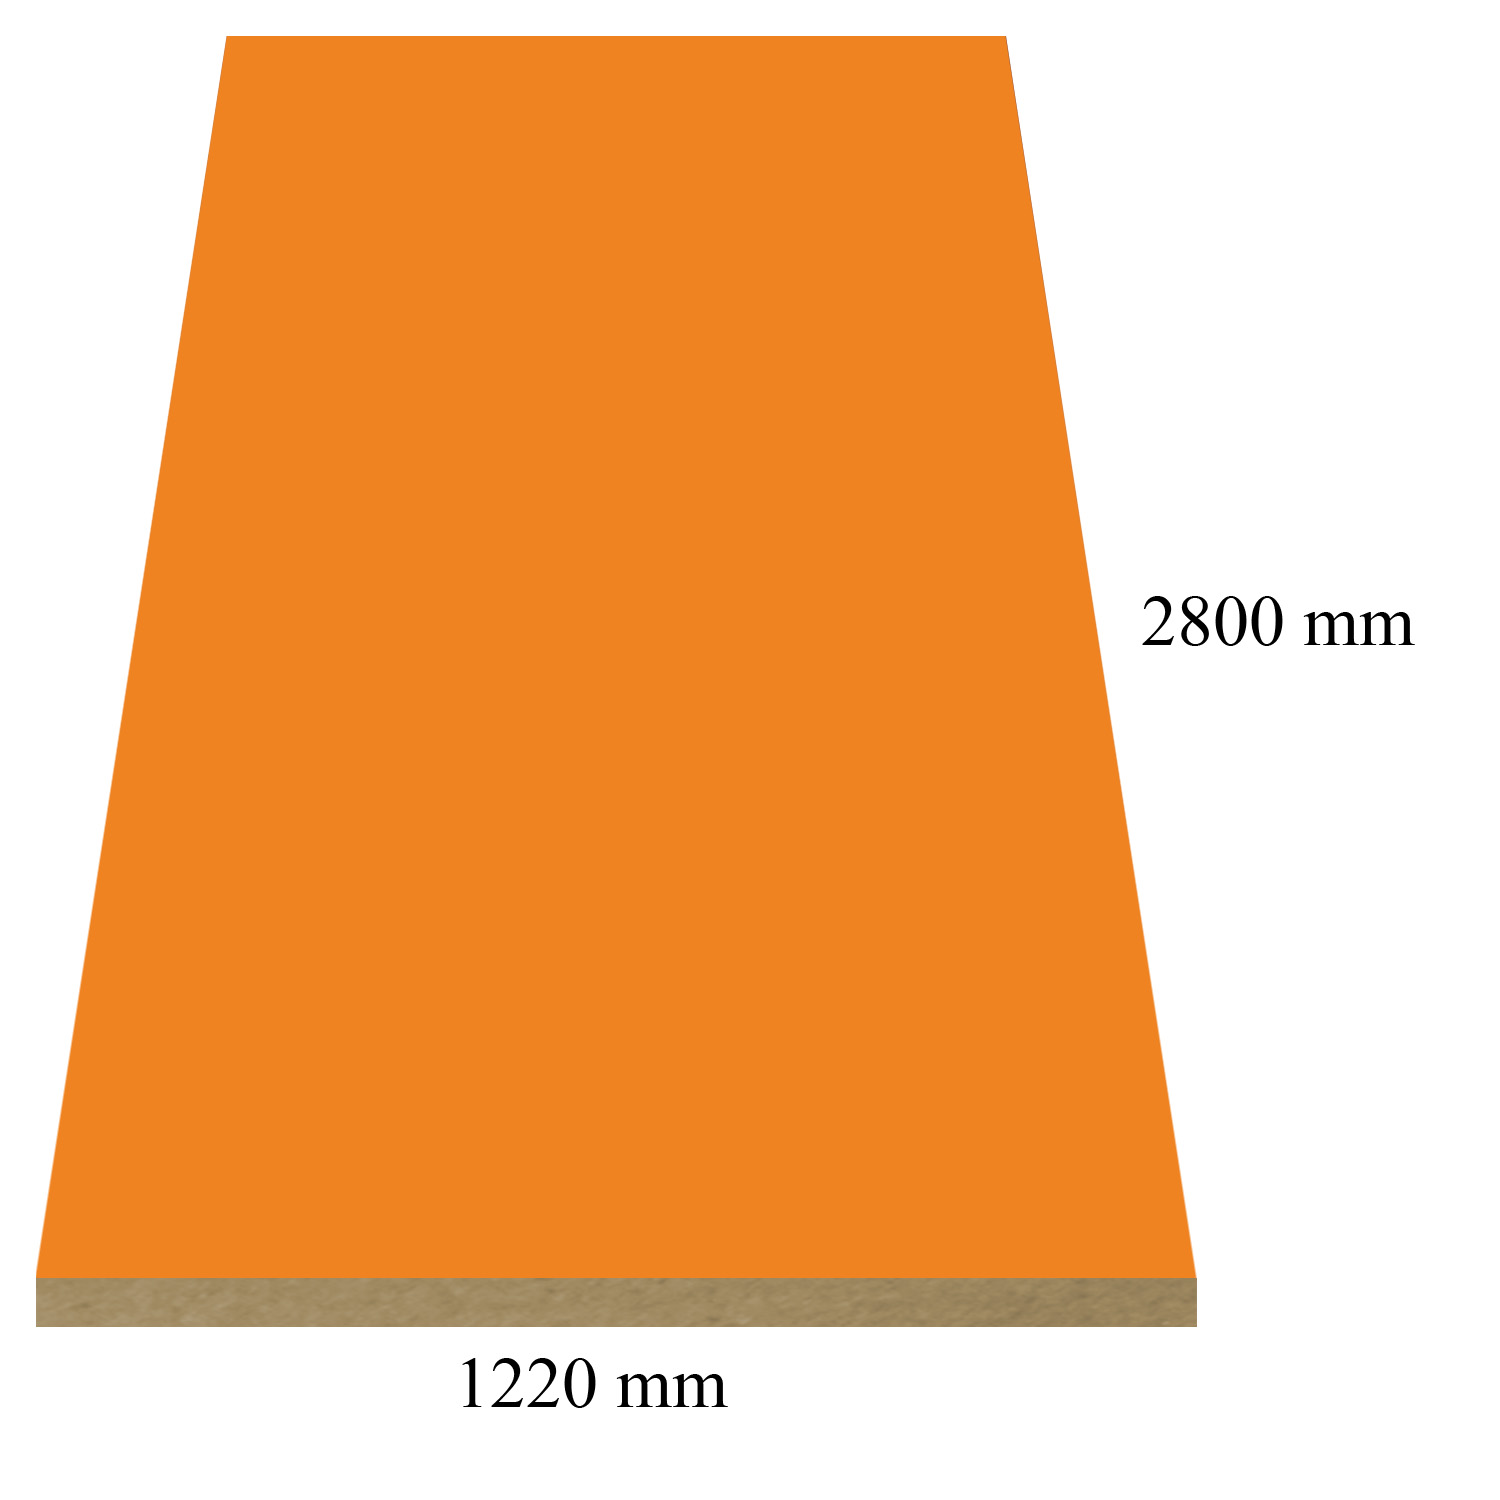 H30 (164) Pastel Orange high gloss - PVC coated 18 mm MDF